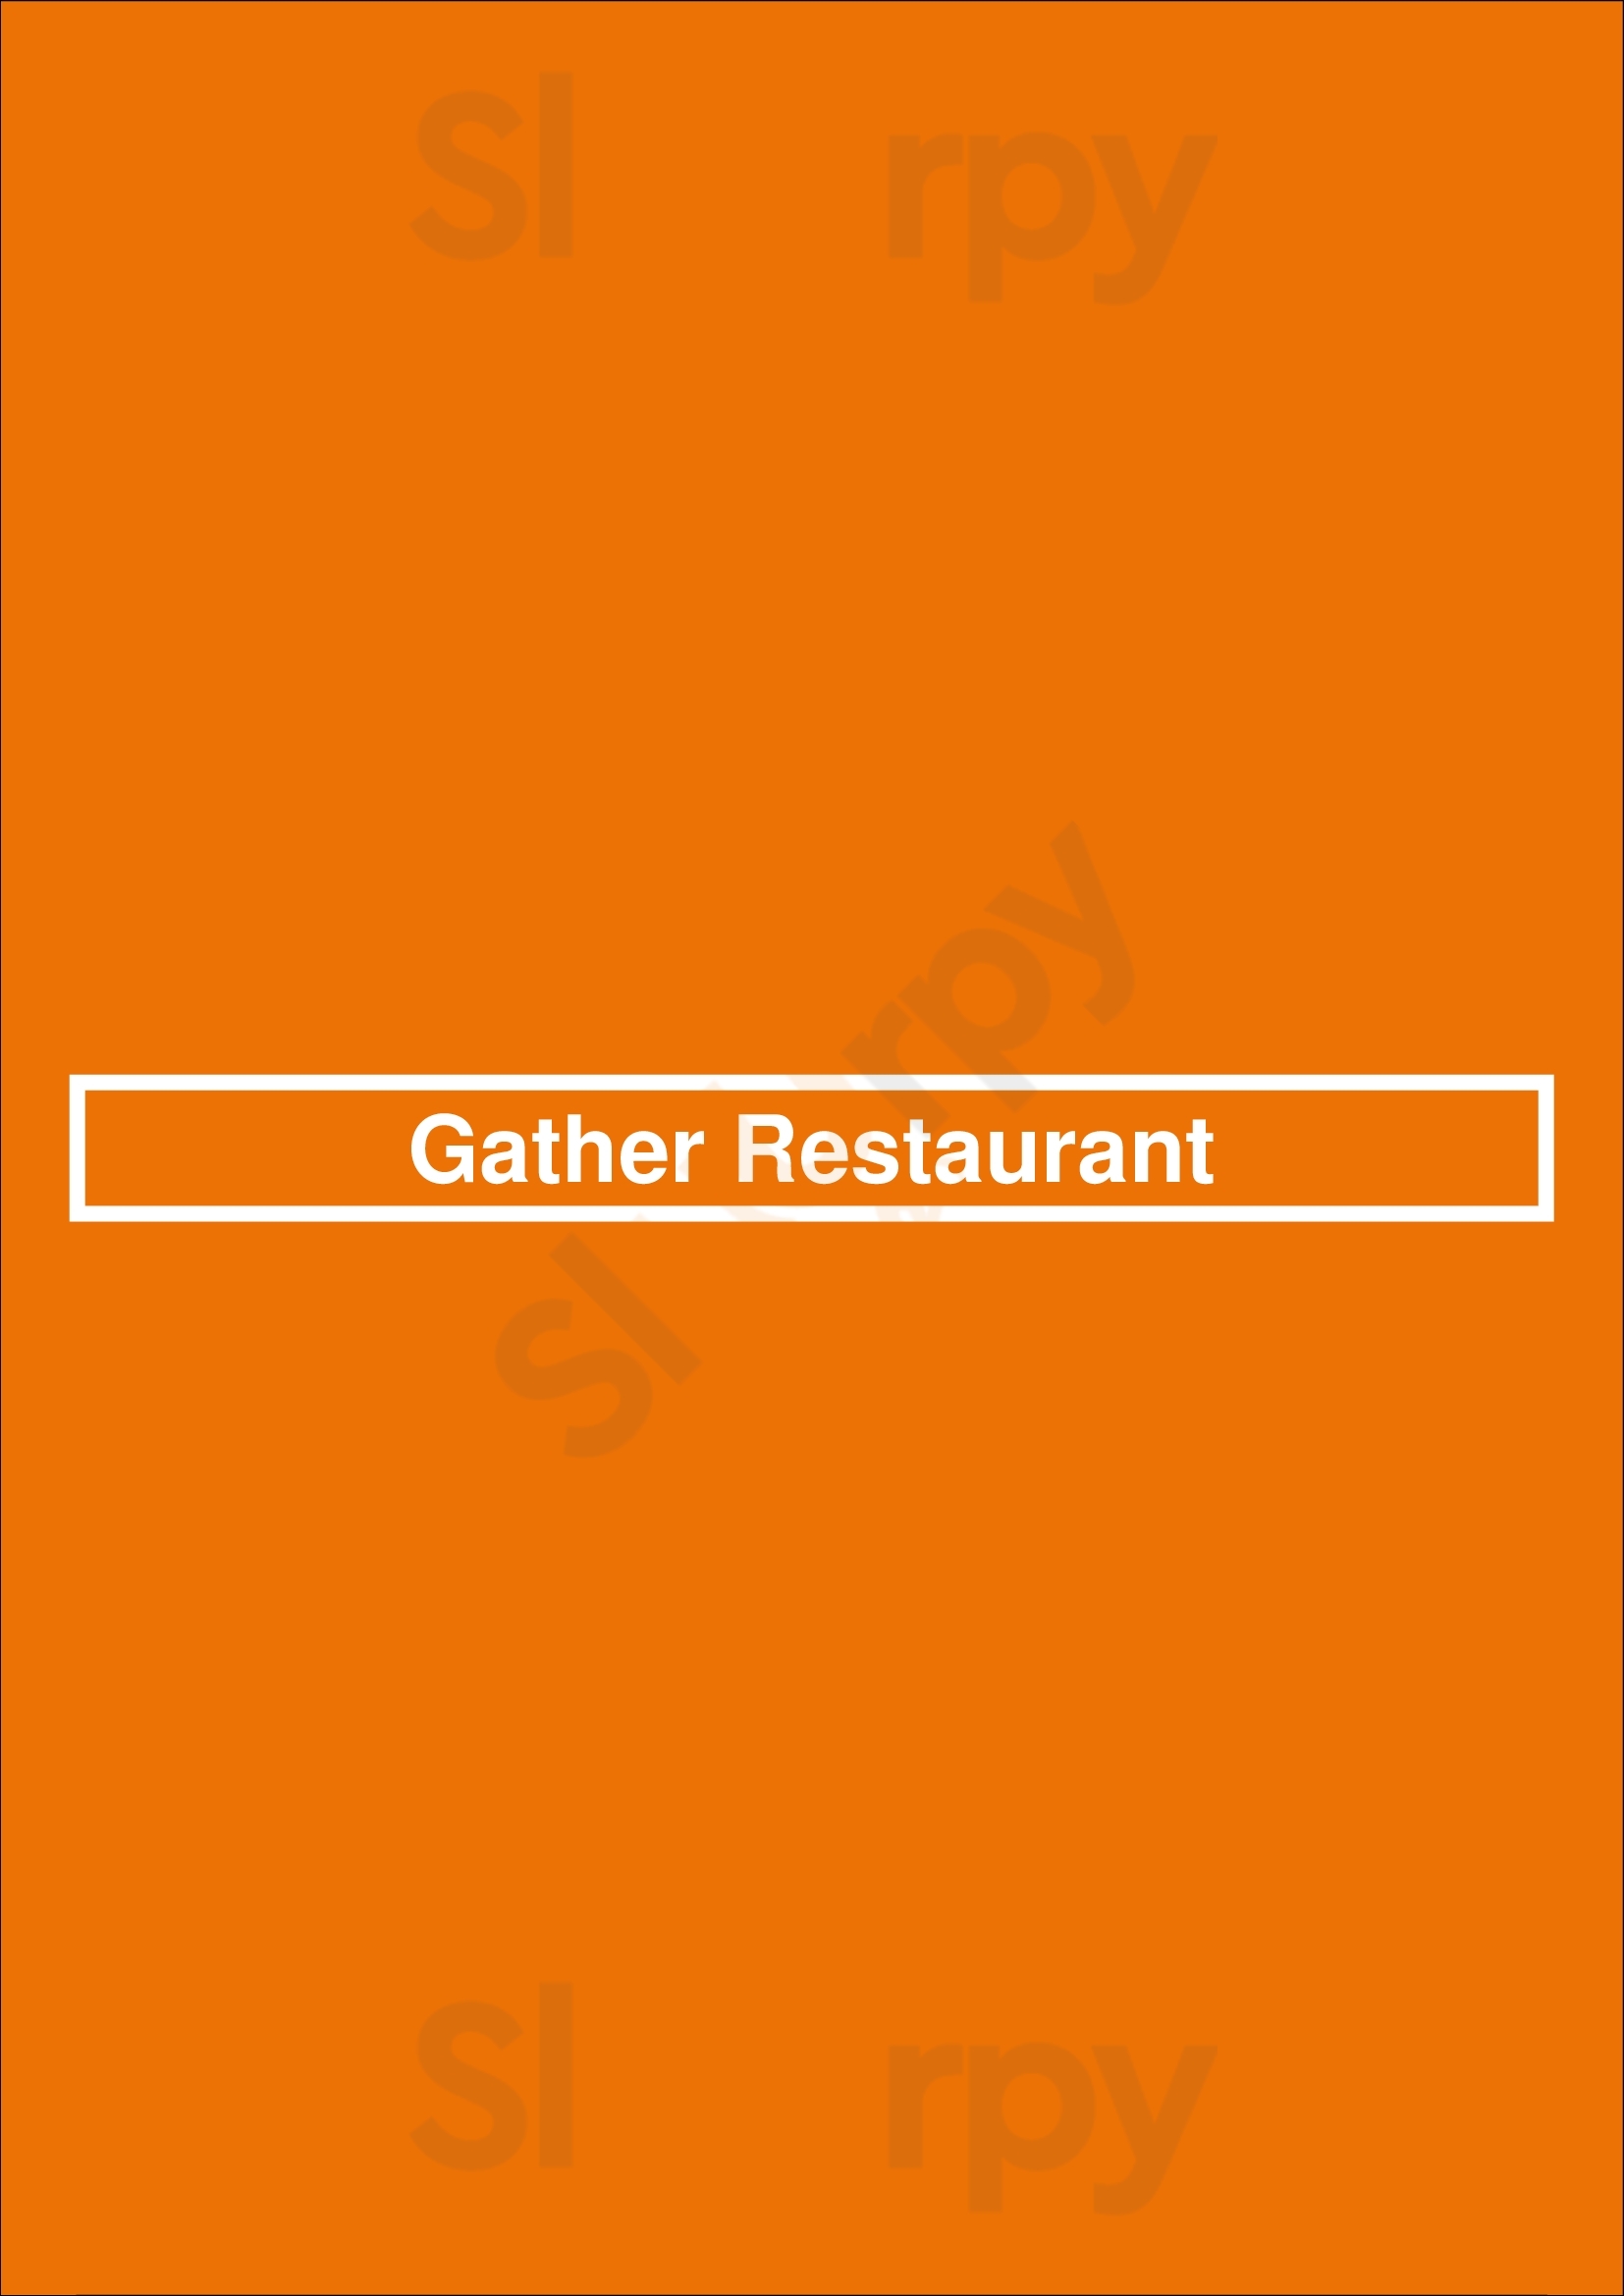 Gather Restaurant Kelowna Menu - 1